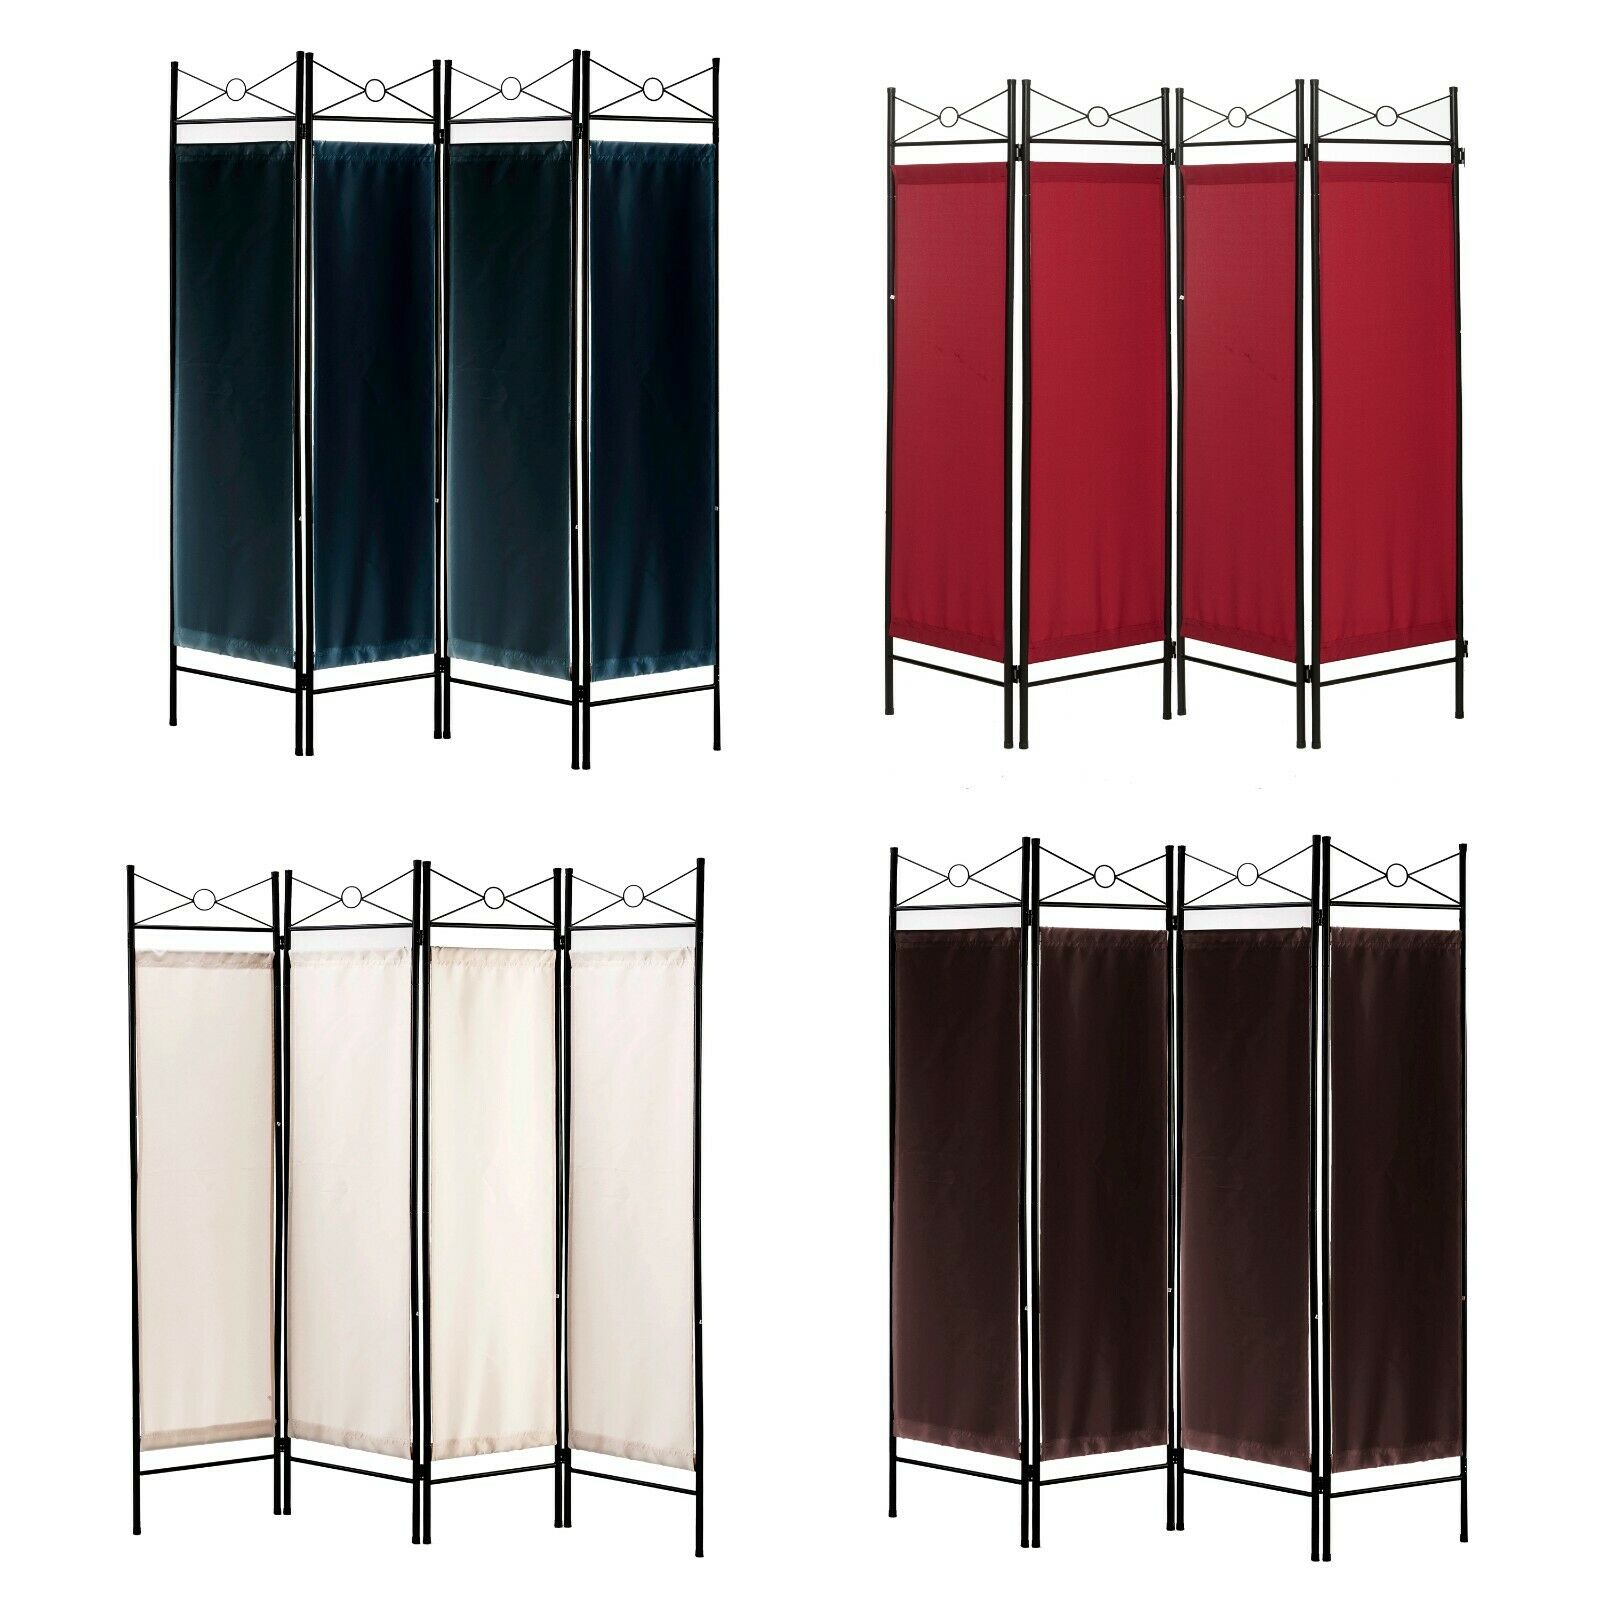 4, 6, 8 Panels Metal Room Divider Screen Black, White, Brown, Red Woven Insert